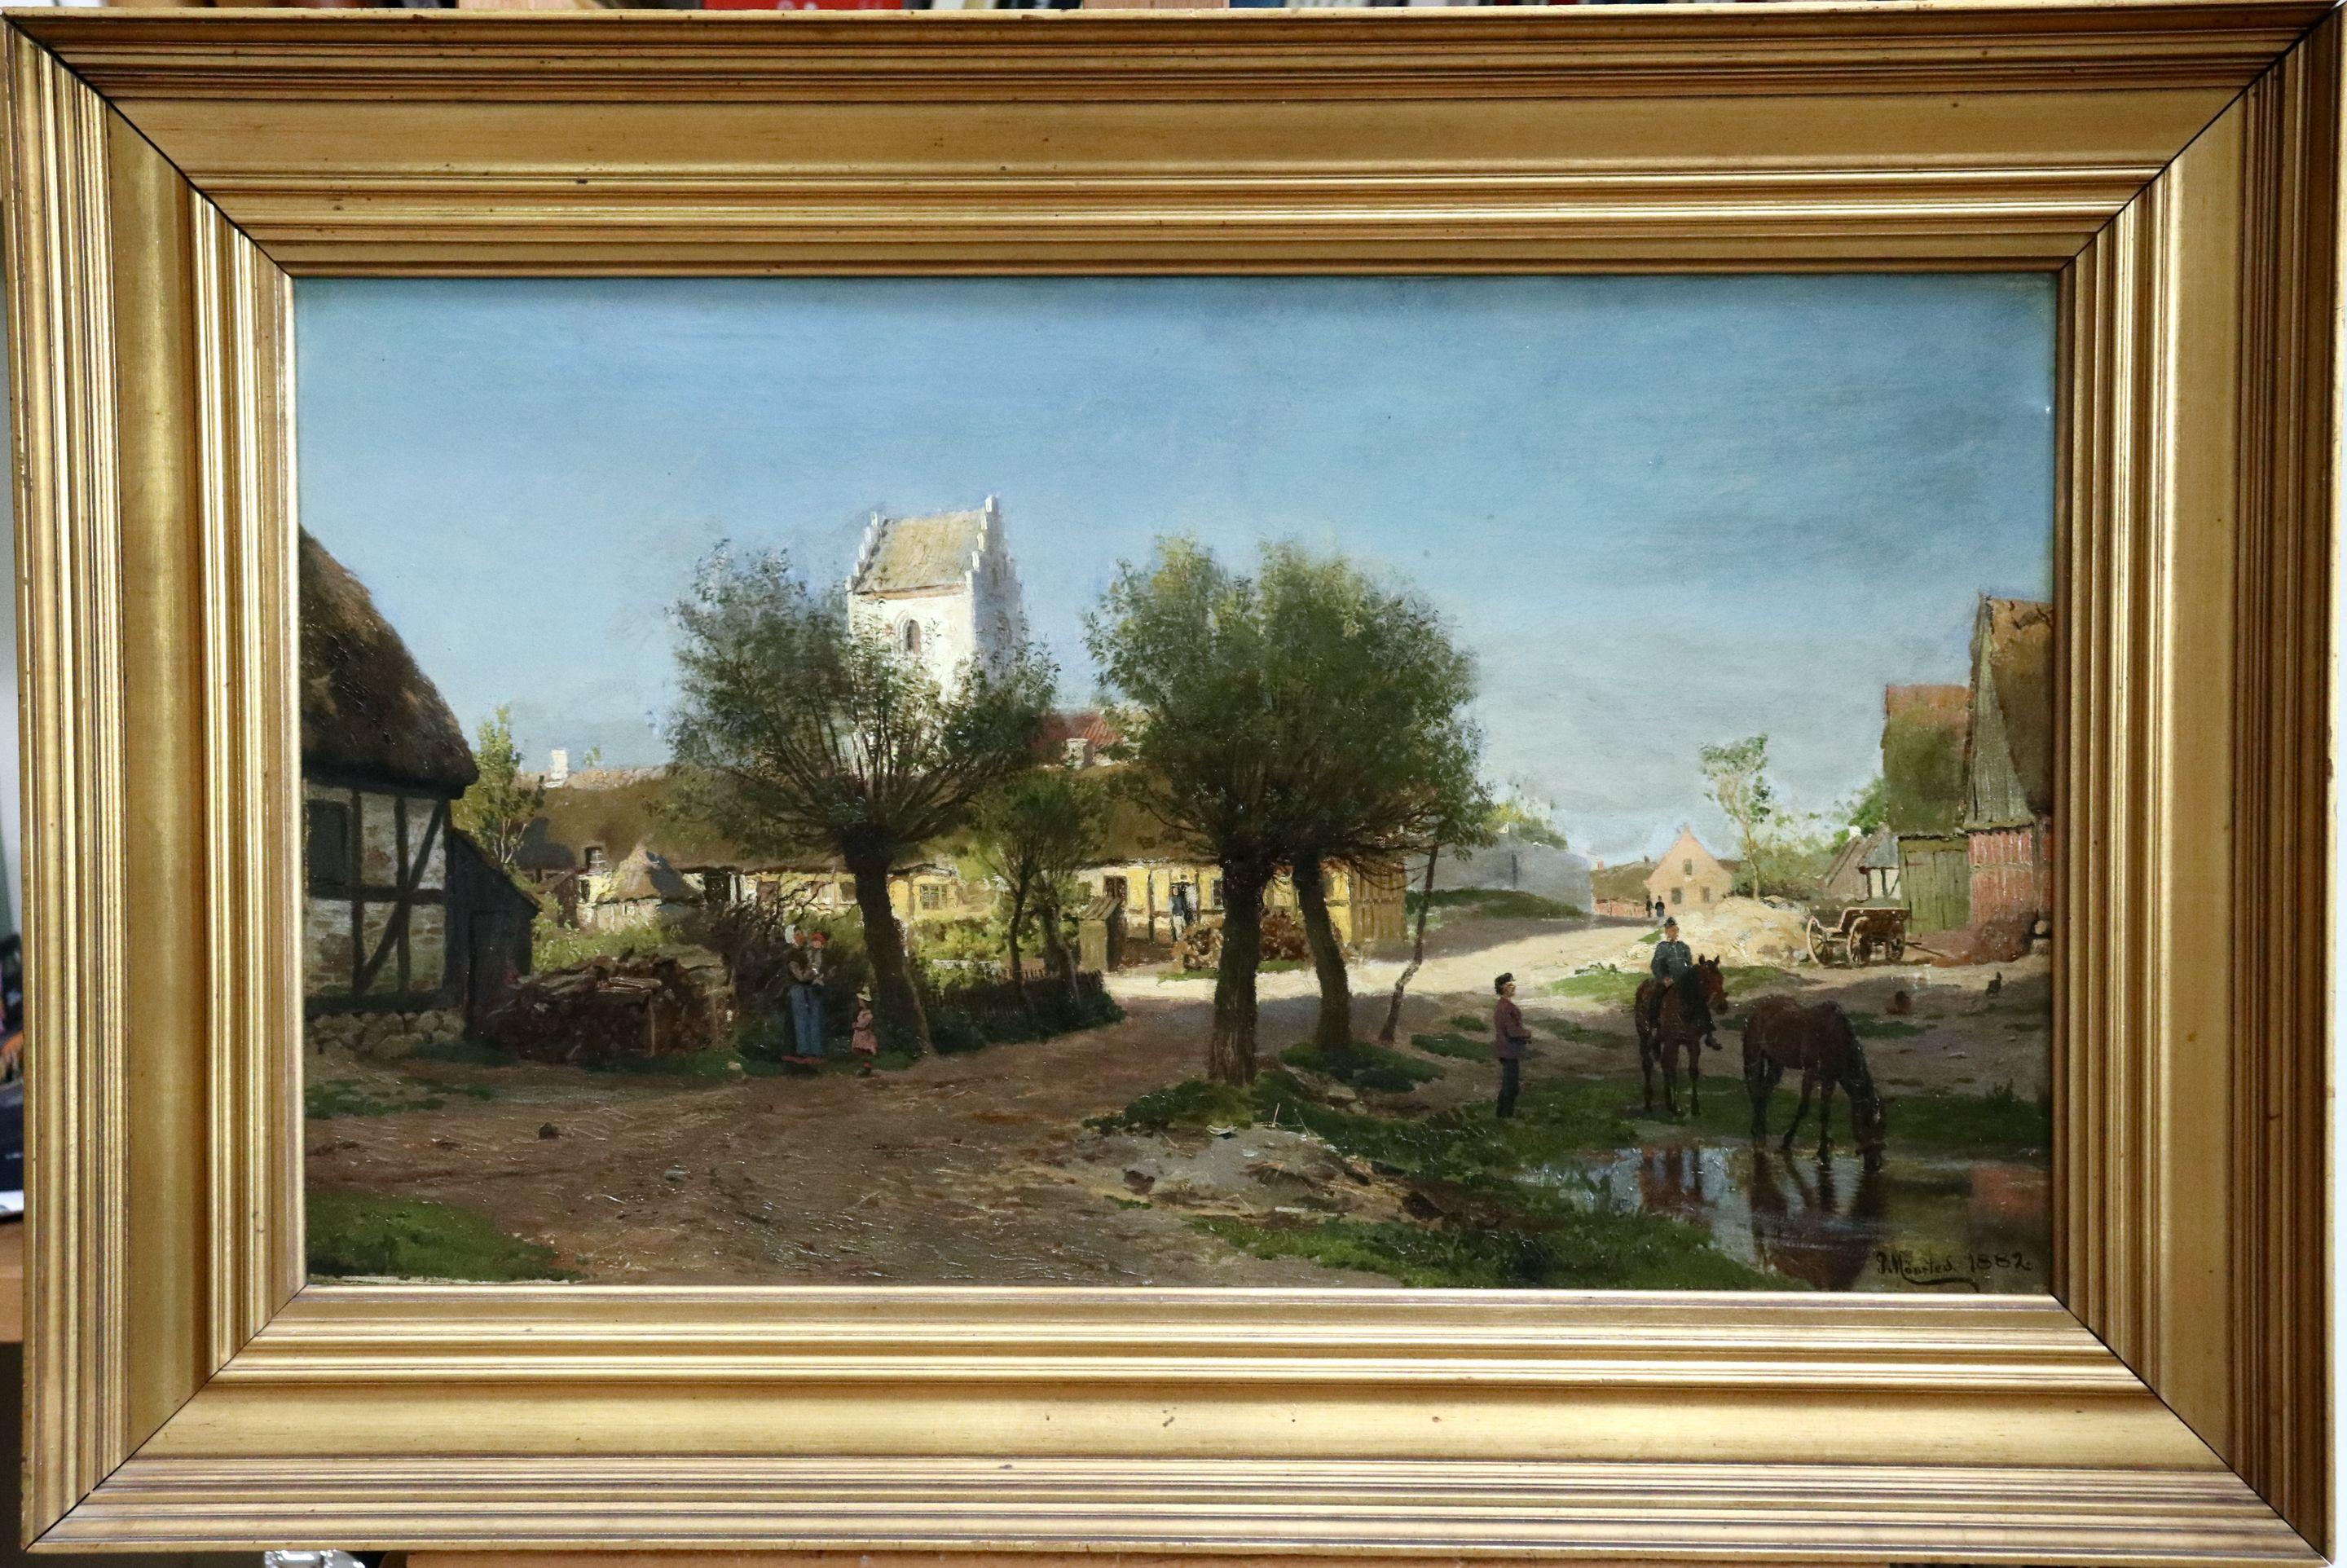 Summer Afternoon in the Village-Aarhus Region - 19th Century Landscape - Monsted - Painting by Peder Mørk Mønsted